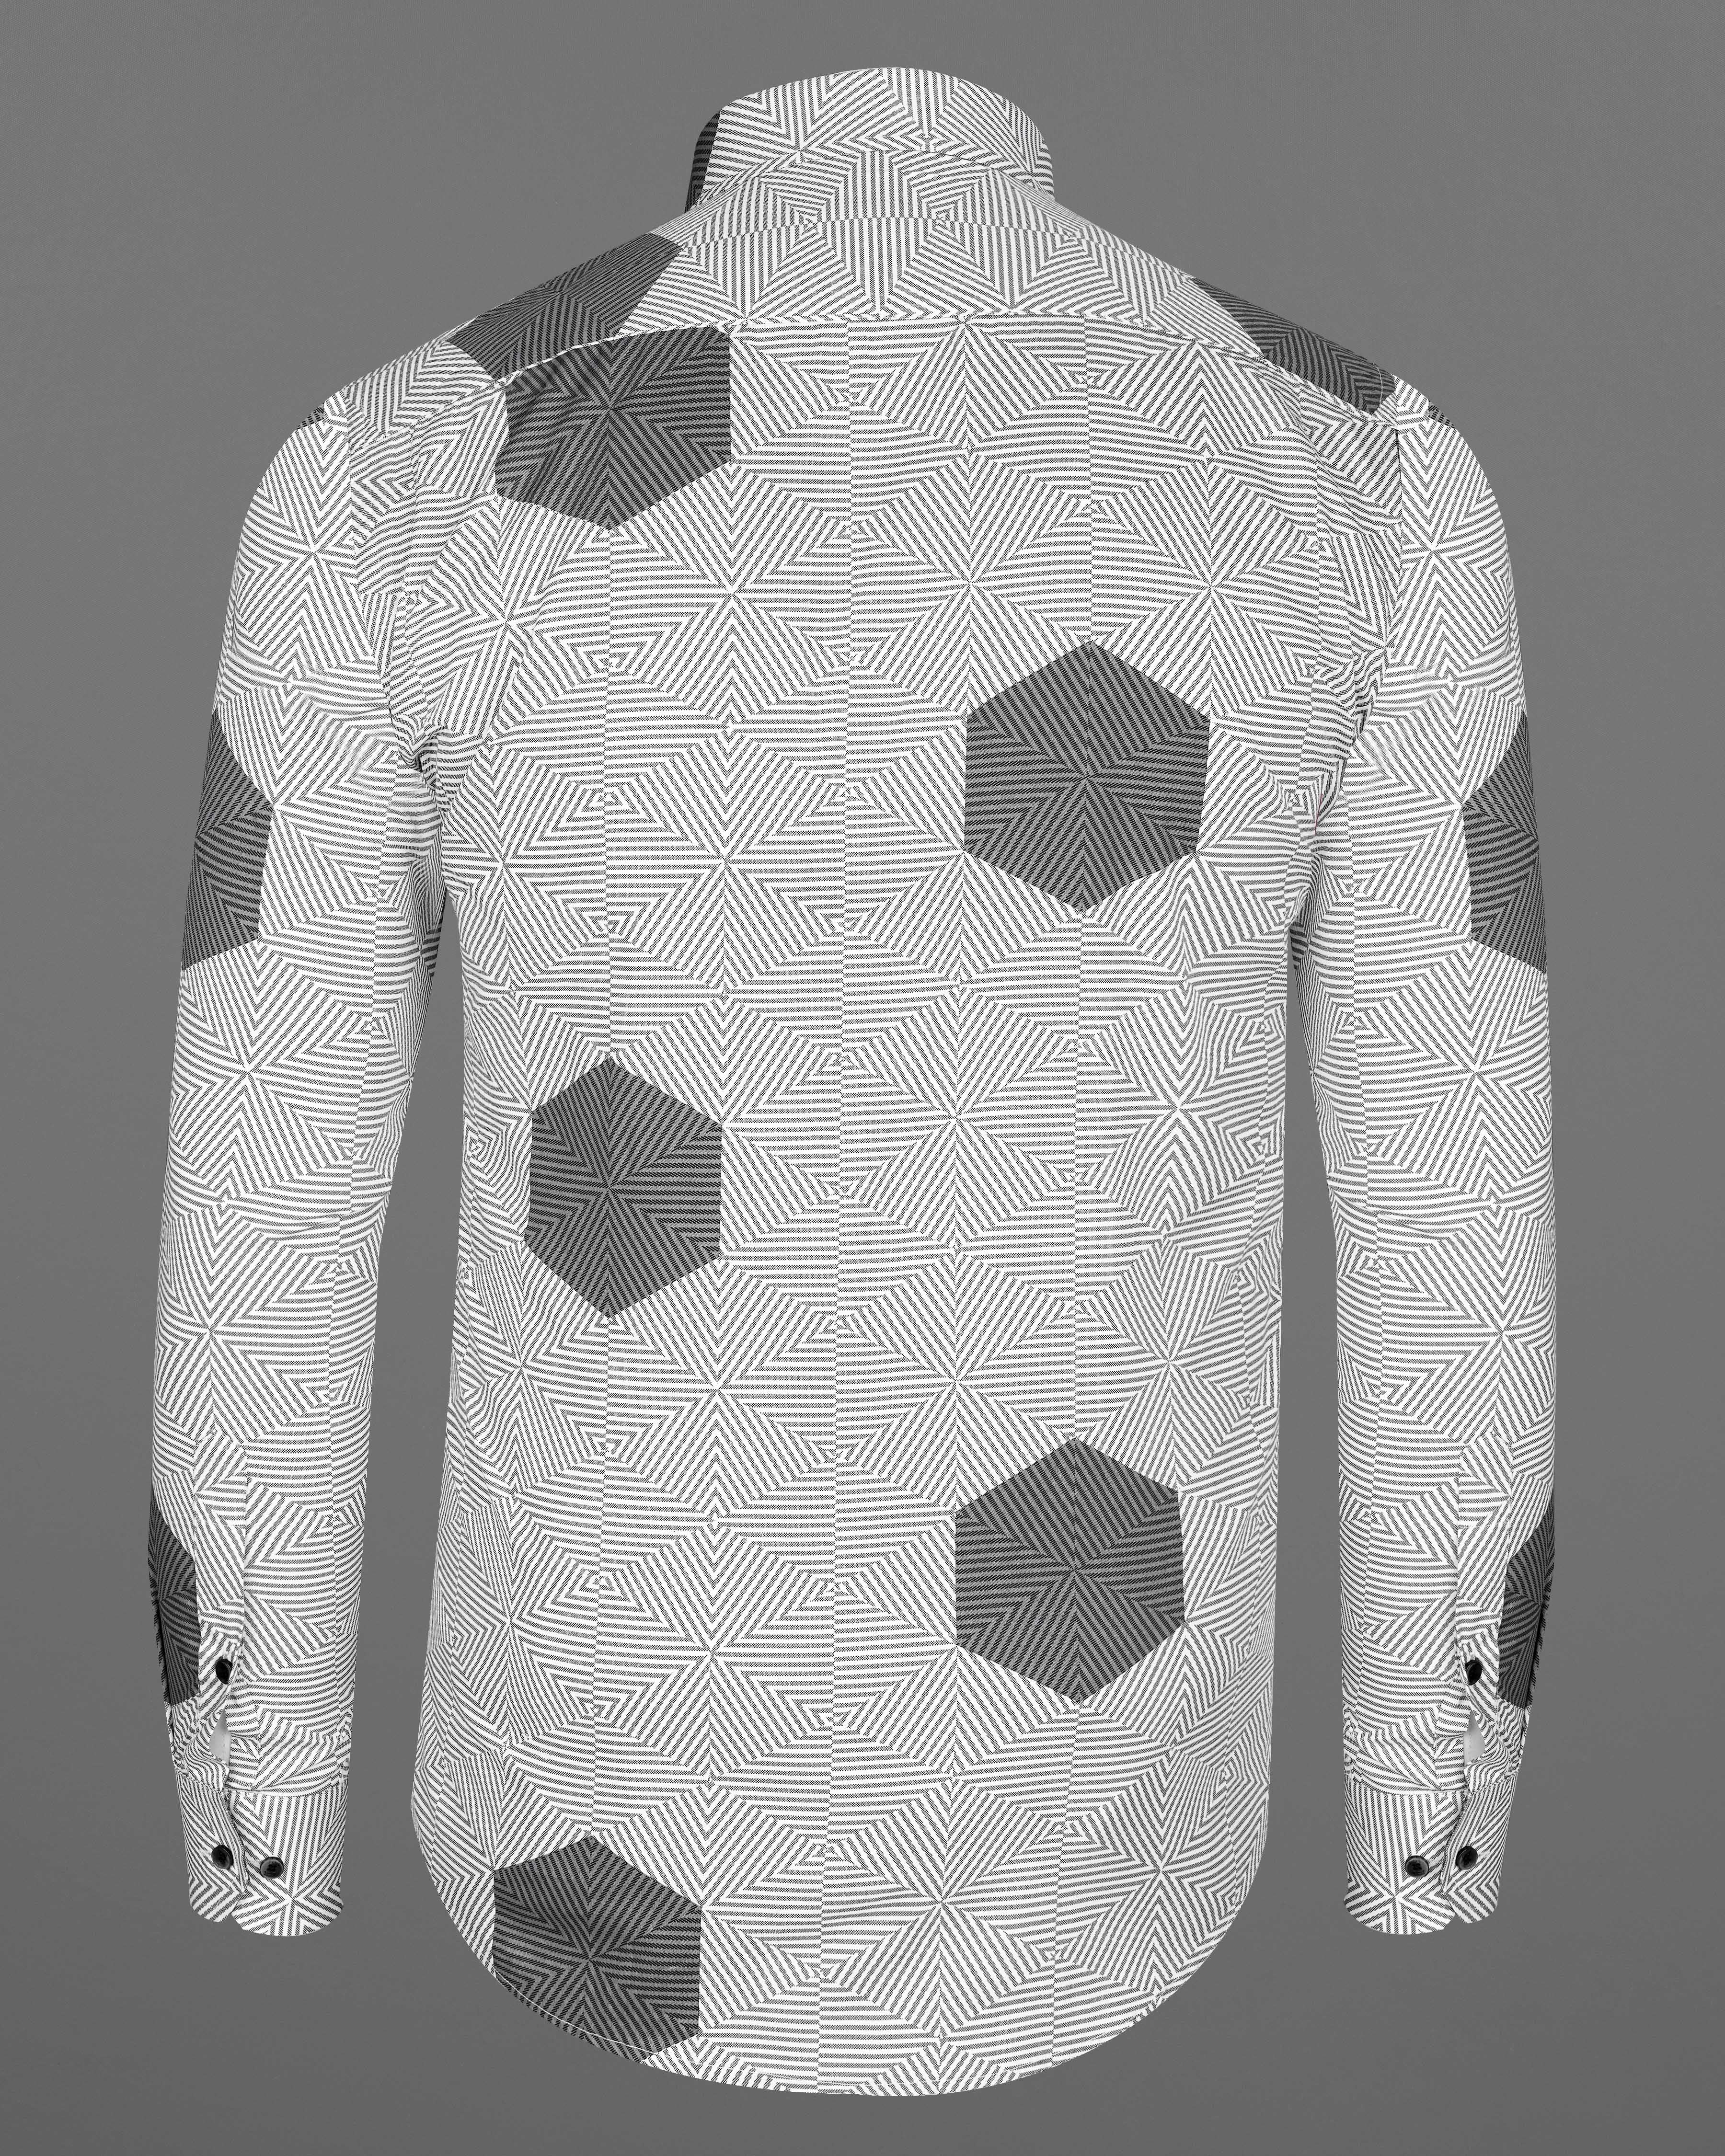 Oslo Gray and Bright White 3D Printed Super Soft Premium Cotton Shirt